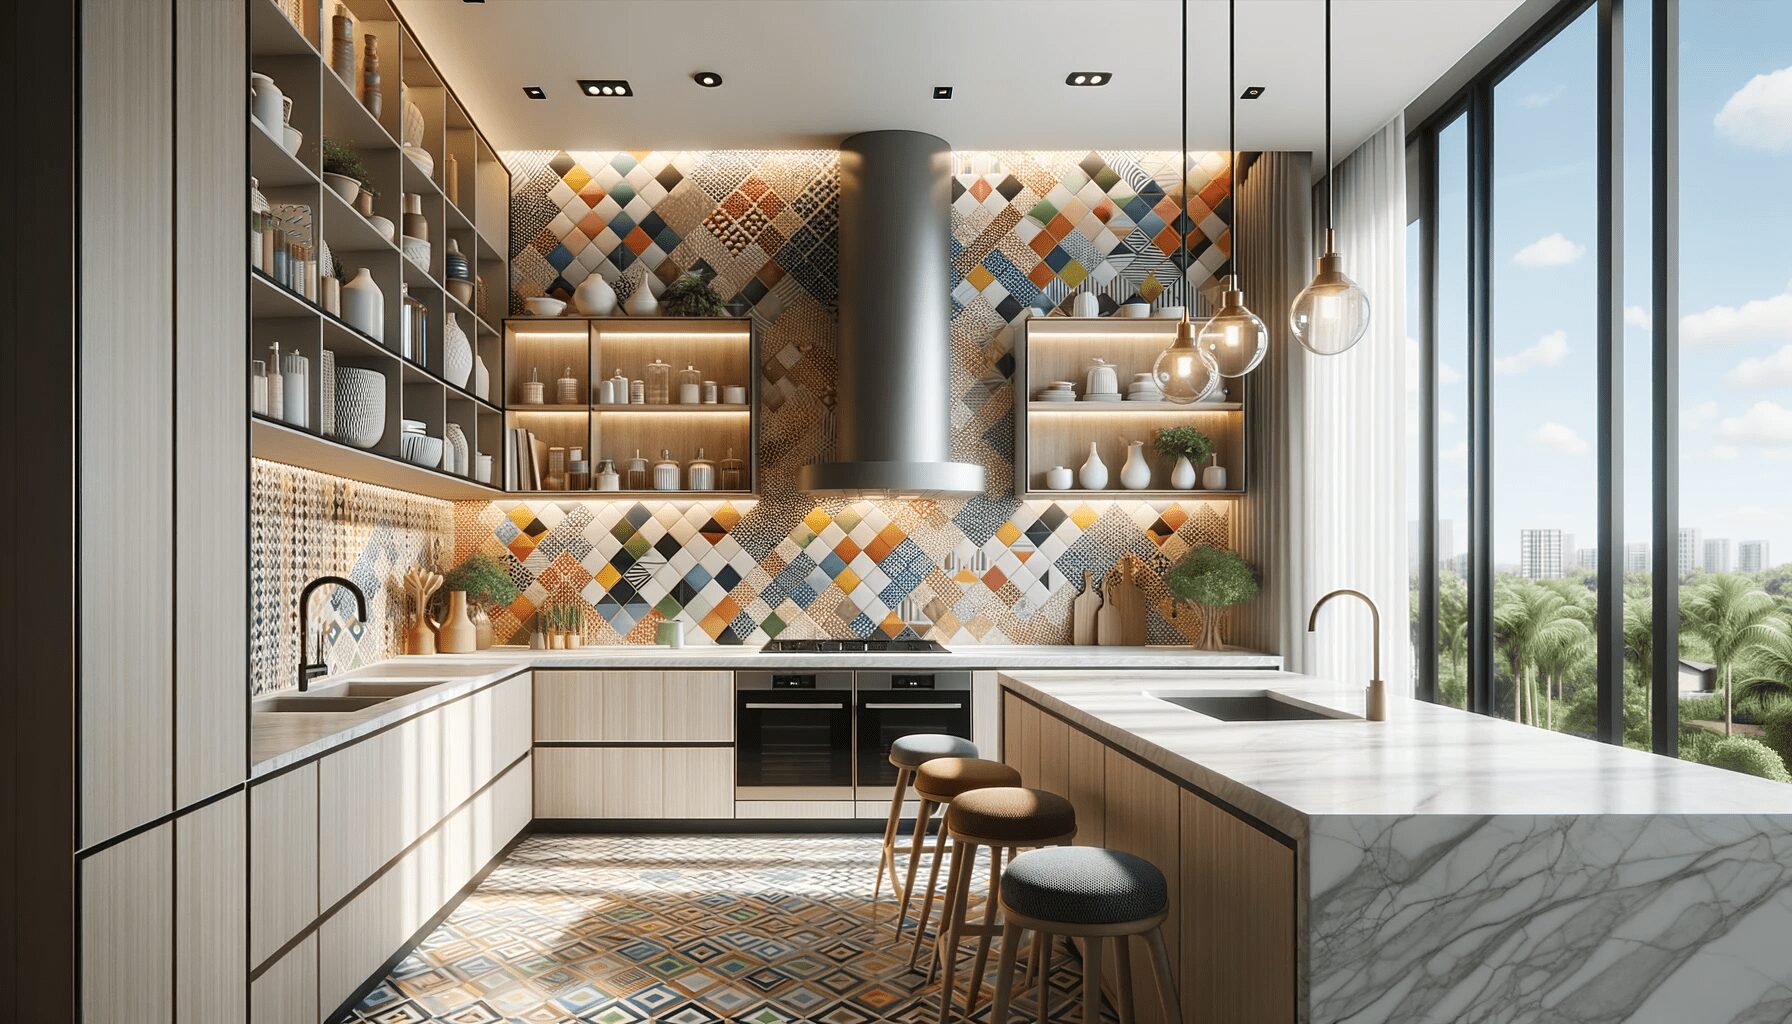 Colorful Geometric Patterns kitchen backsplash